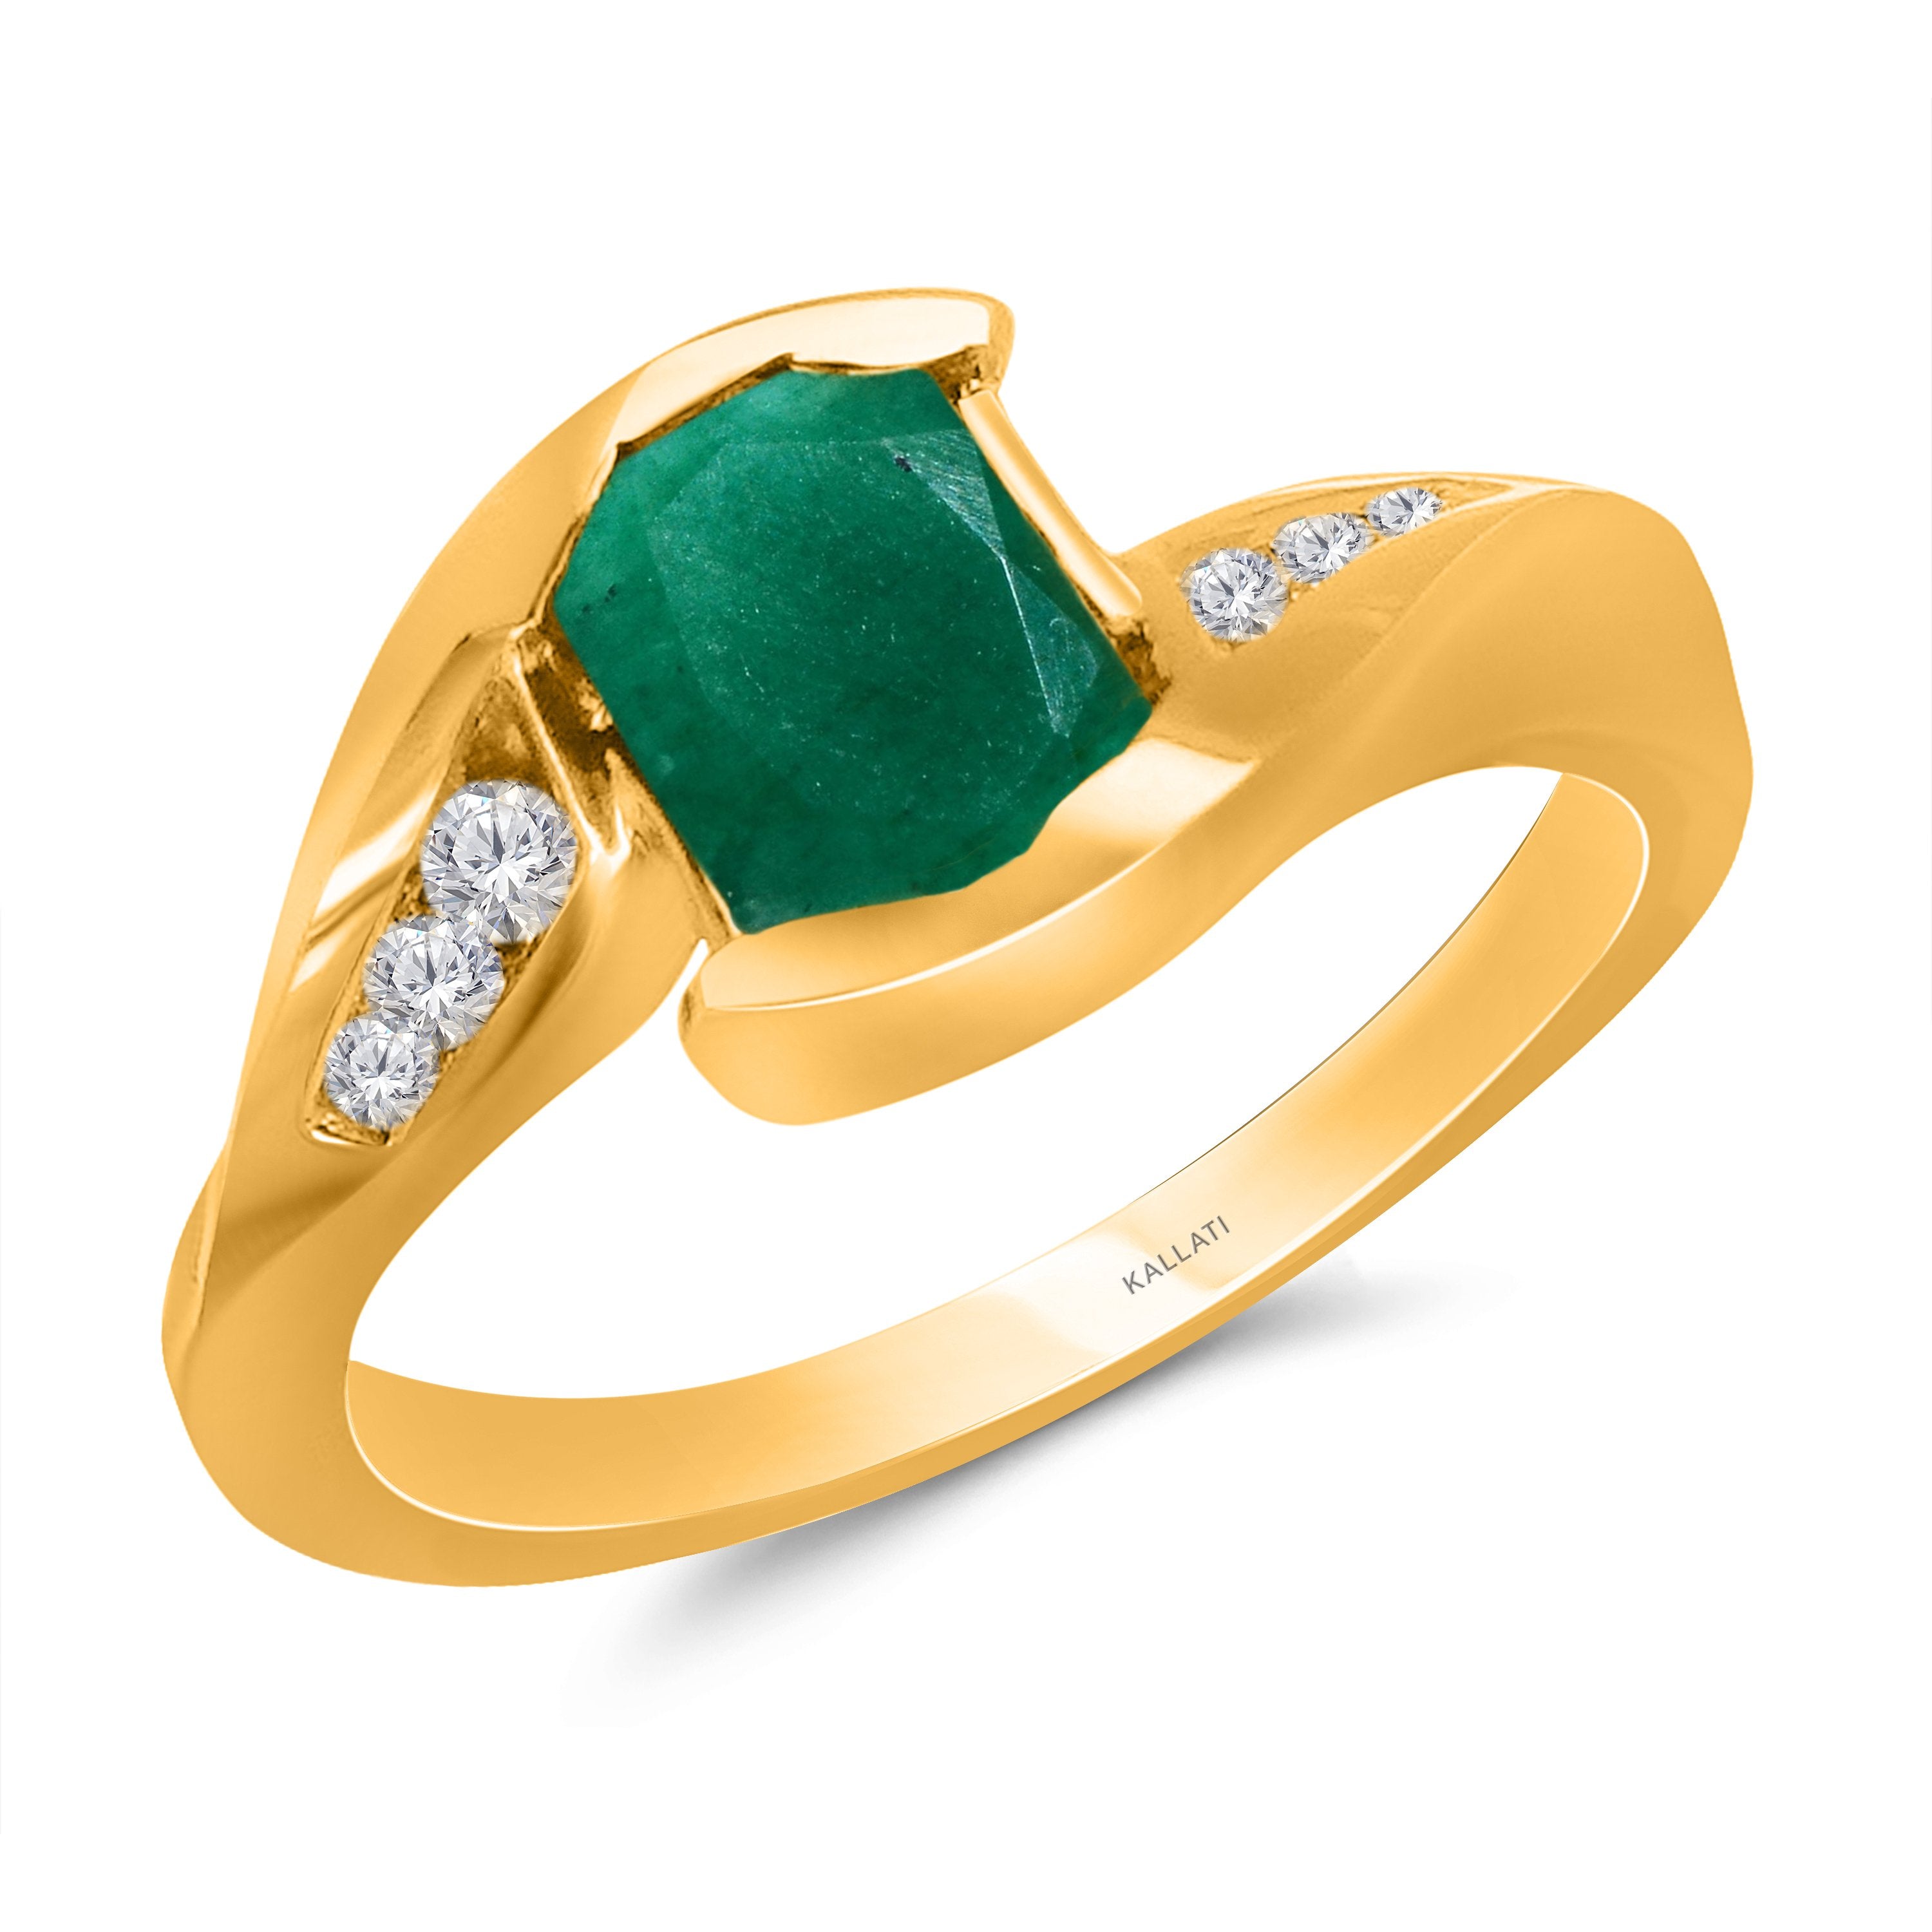 Heirloom Style Diamond Engagement Ring | Birks 1879